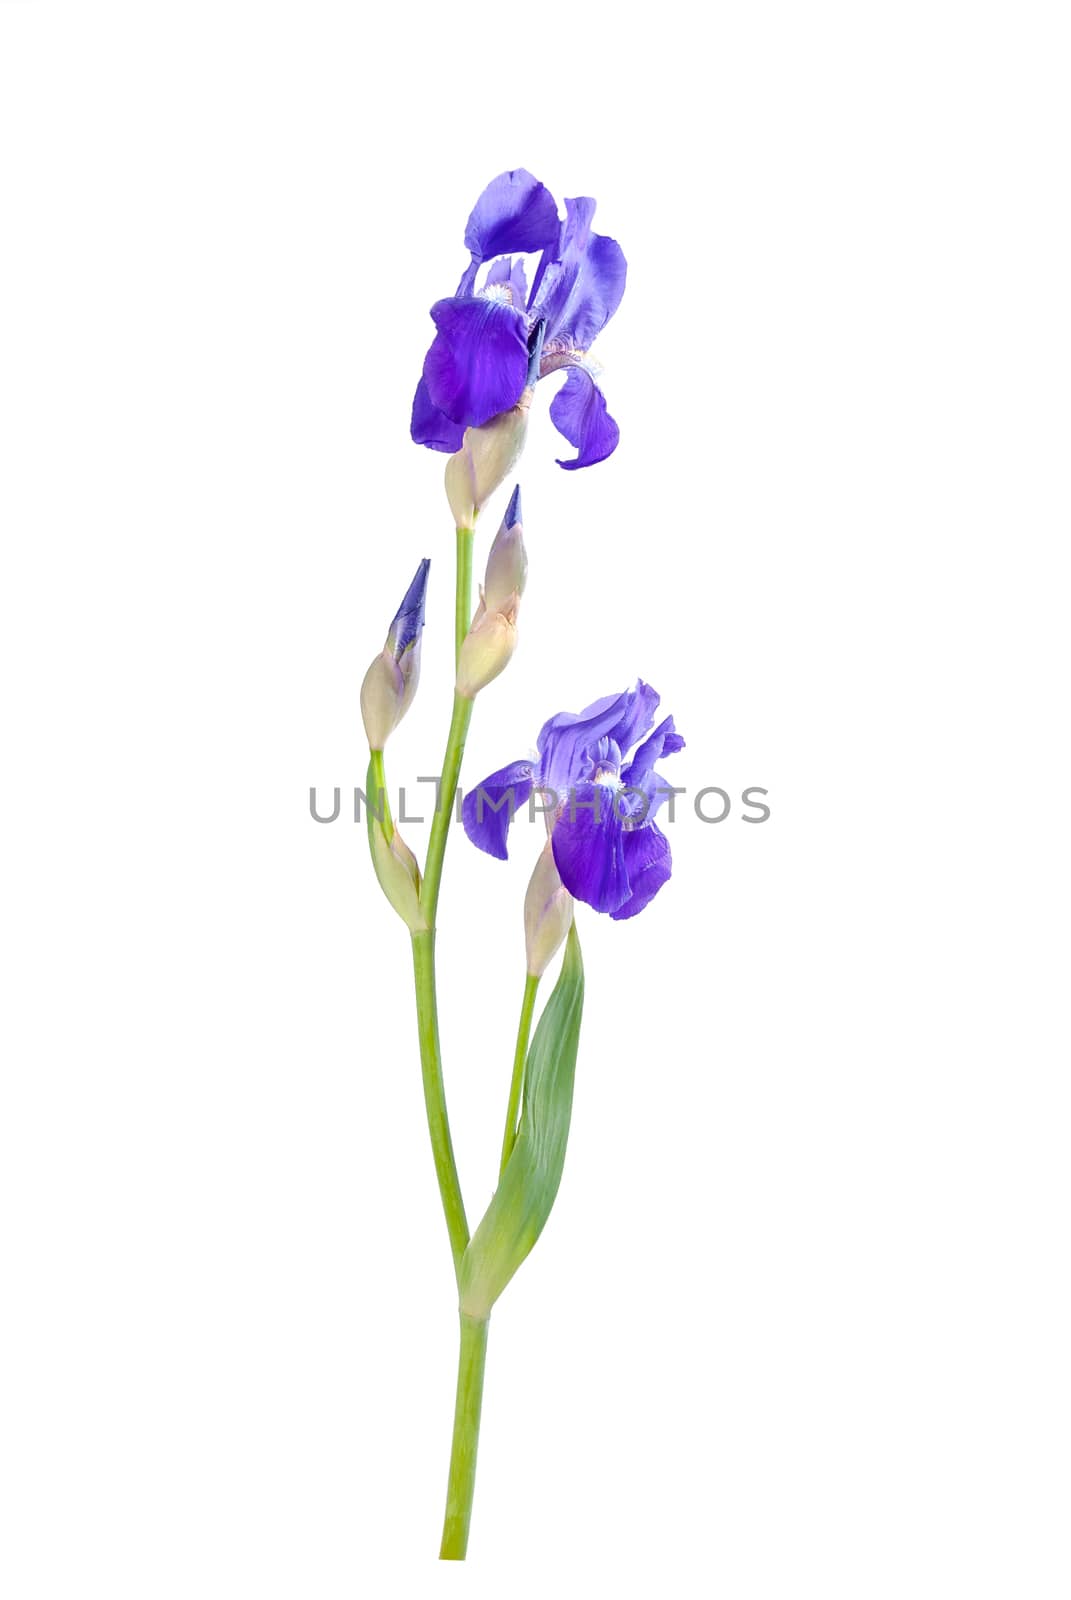 Iris flower isolated on white background